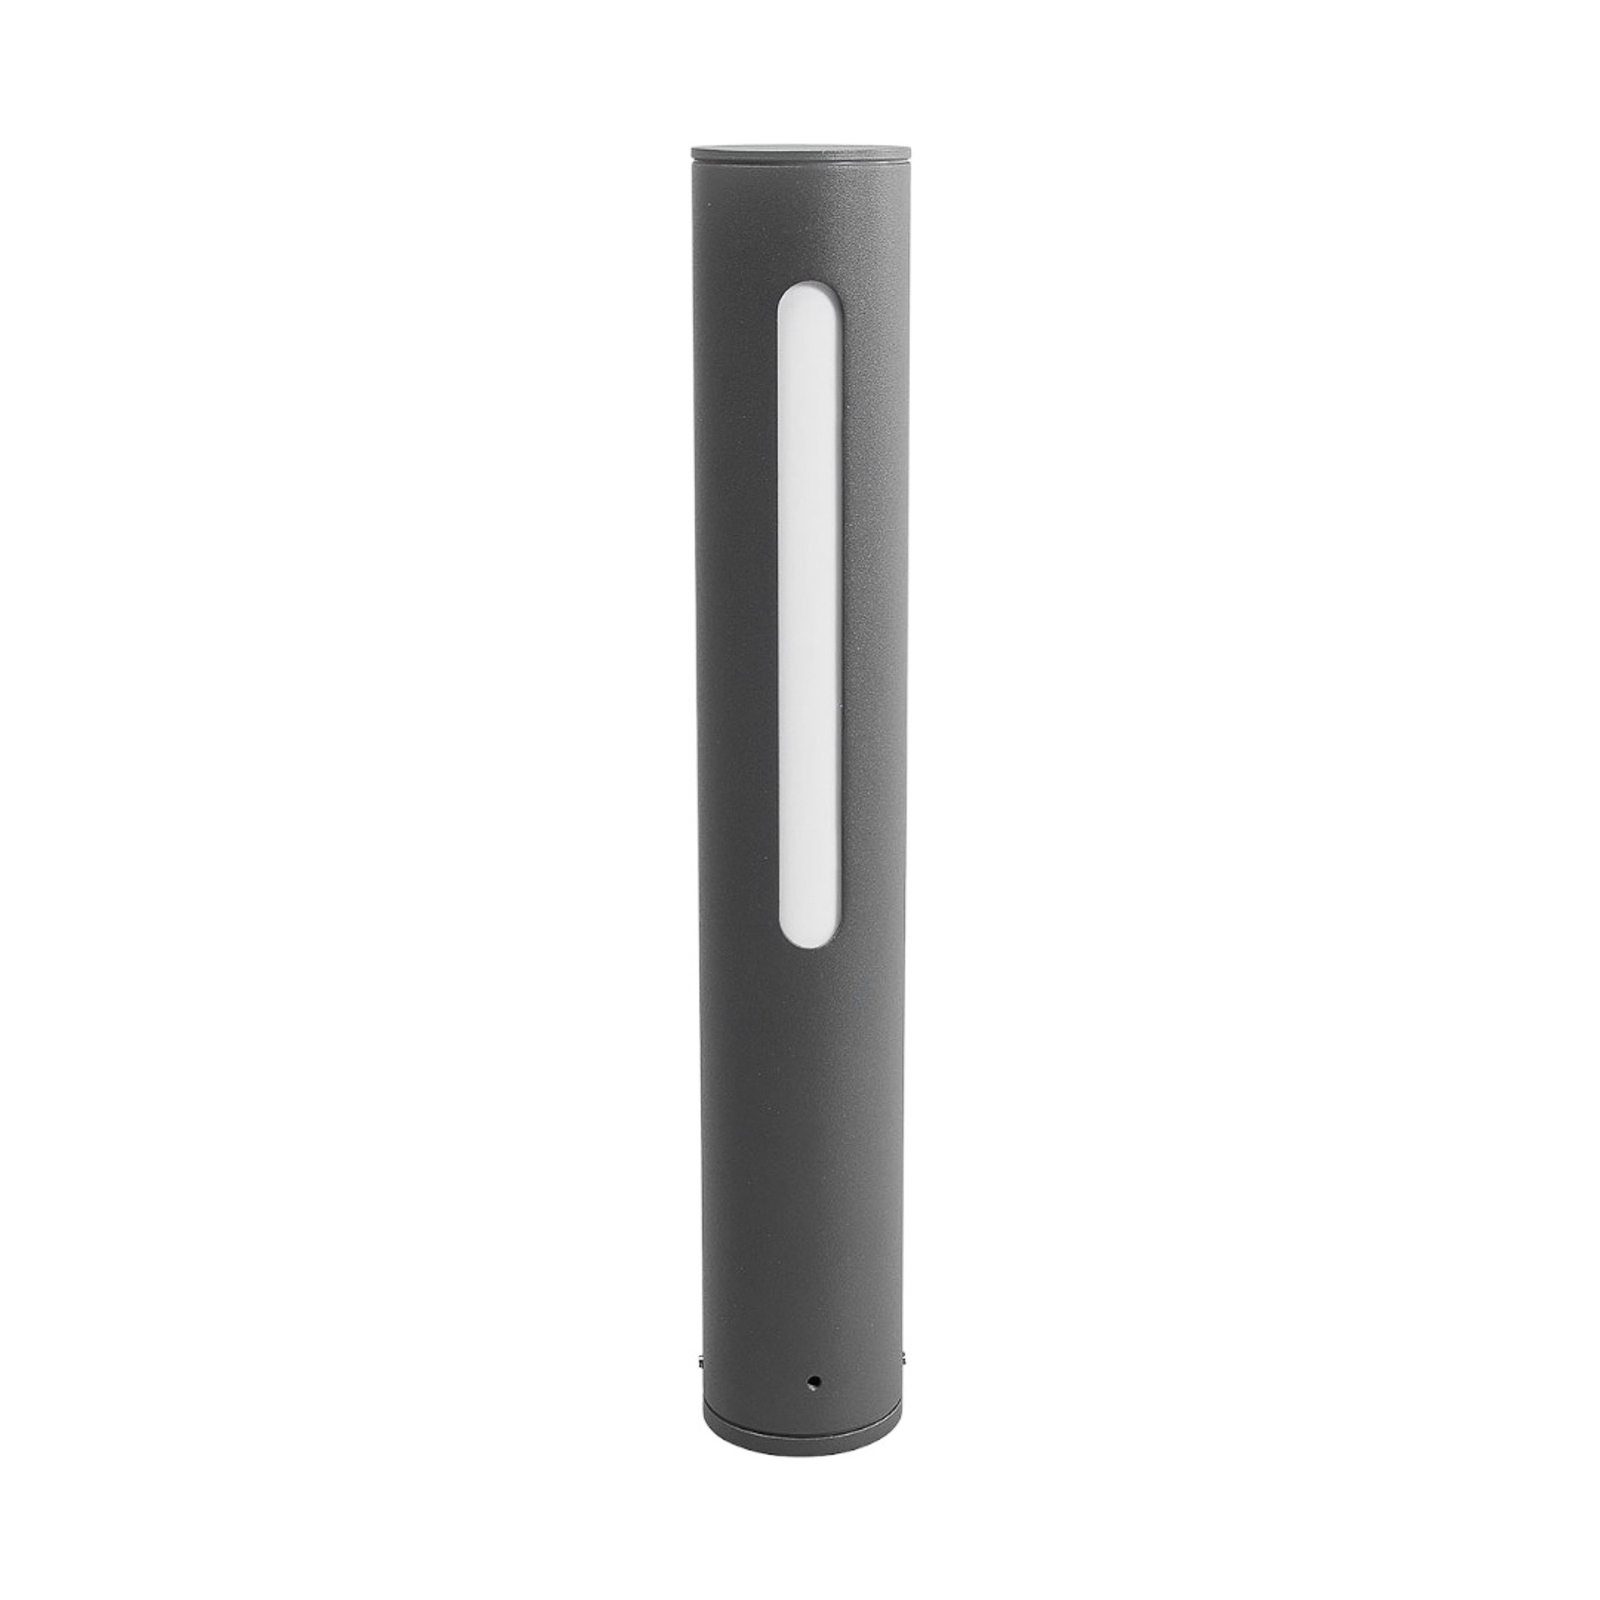 Tomas - farola LED de color gris oscuro